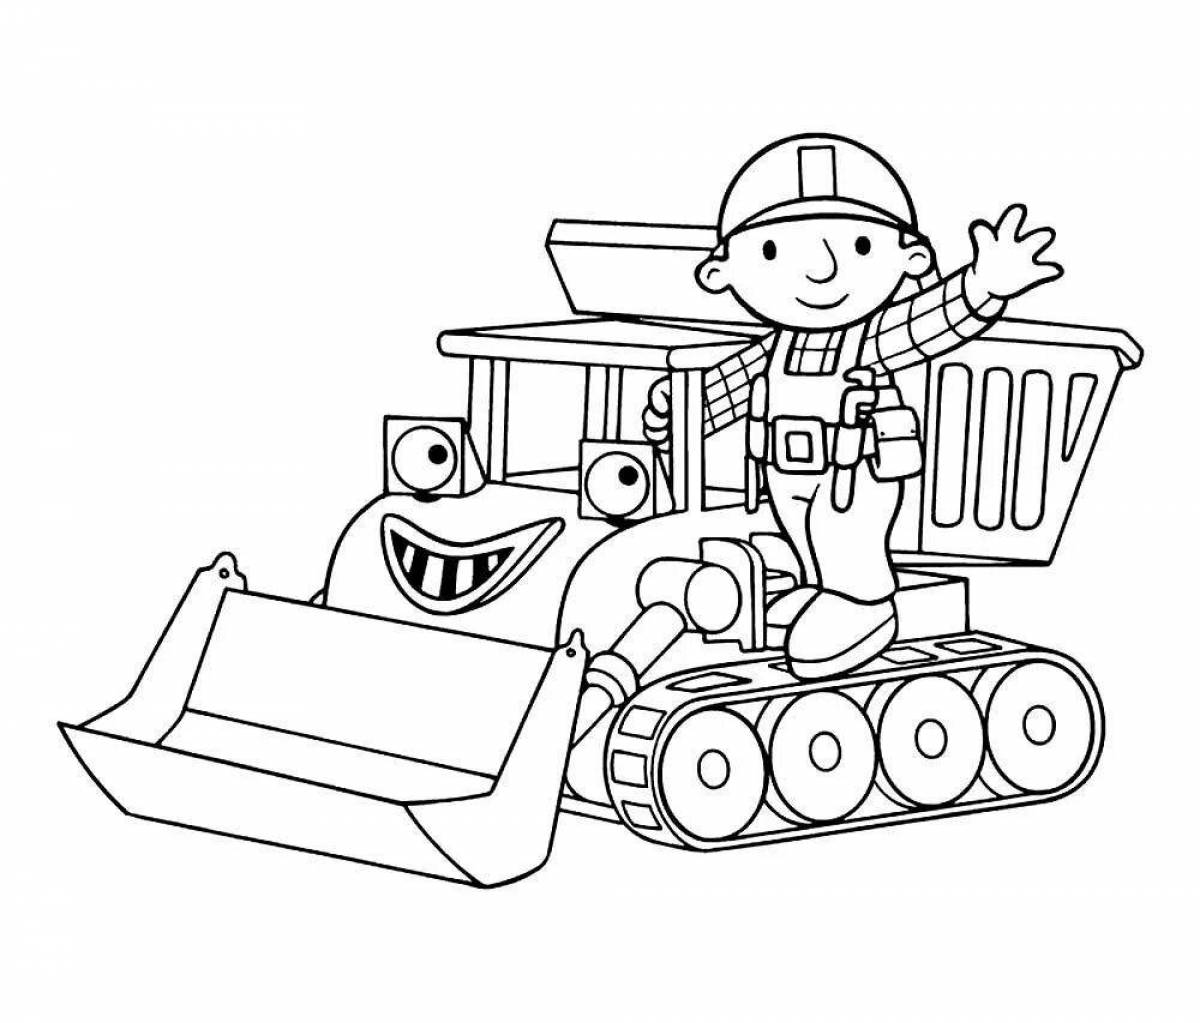 Incredible bulldozer coloring book for preschoolers